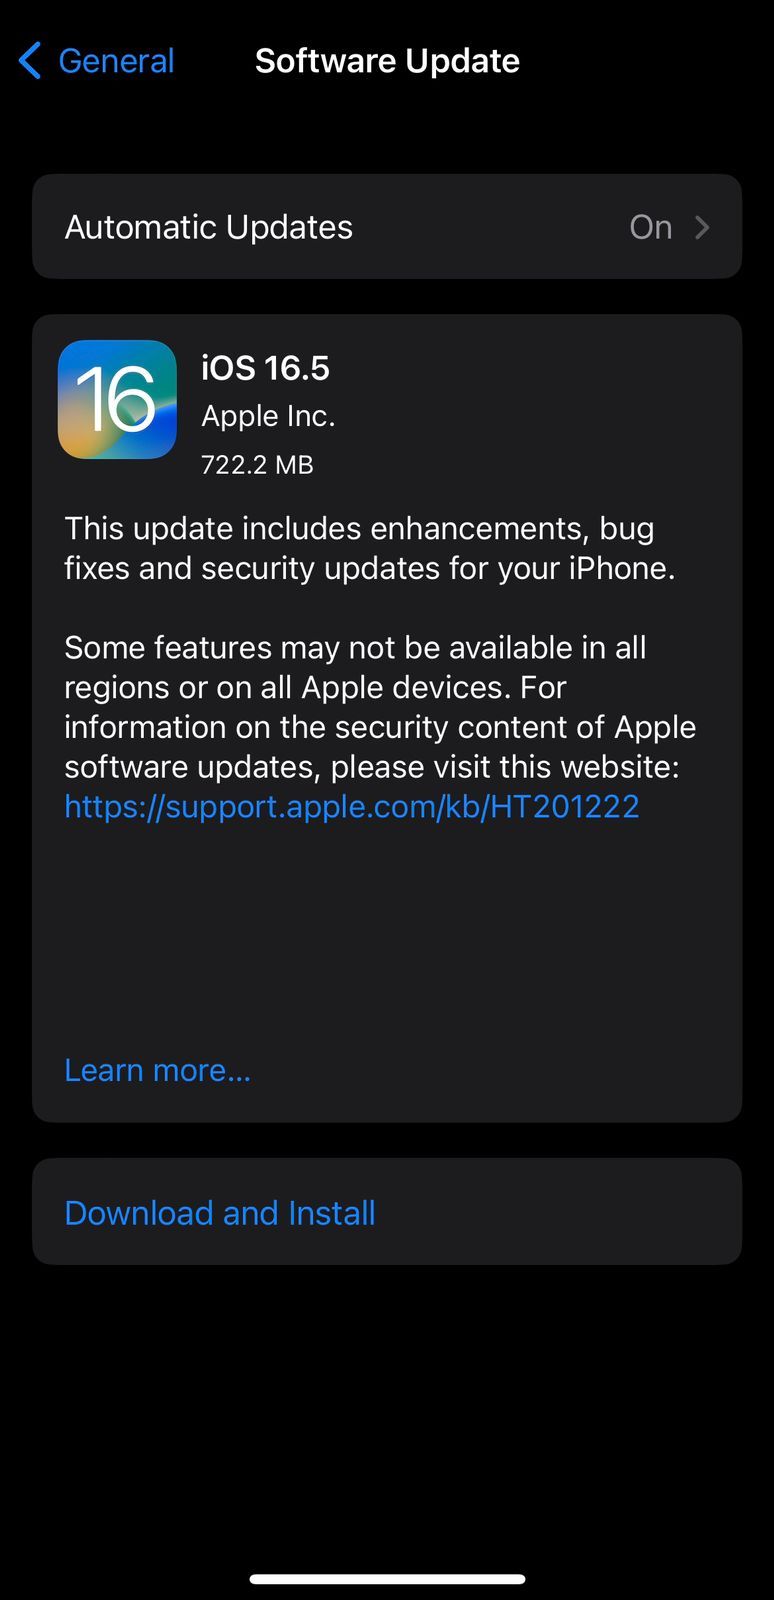 Software Update iOS 16.5